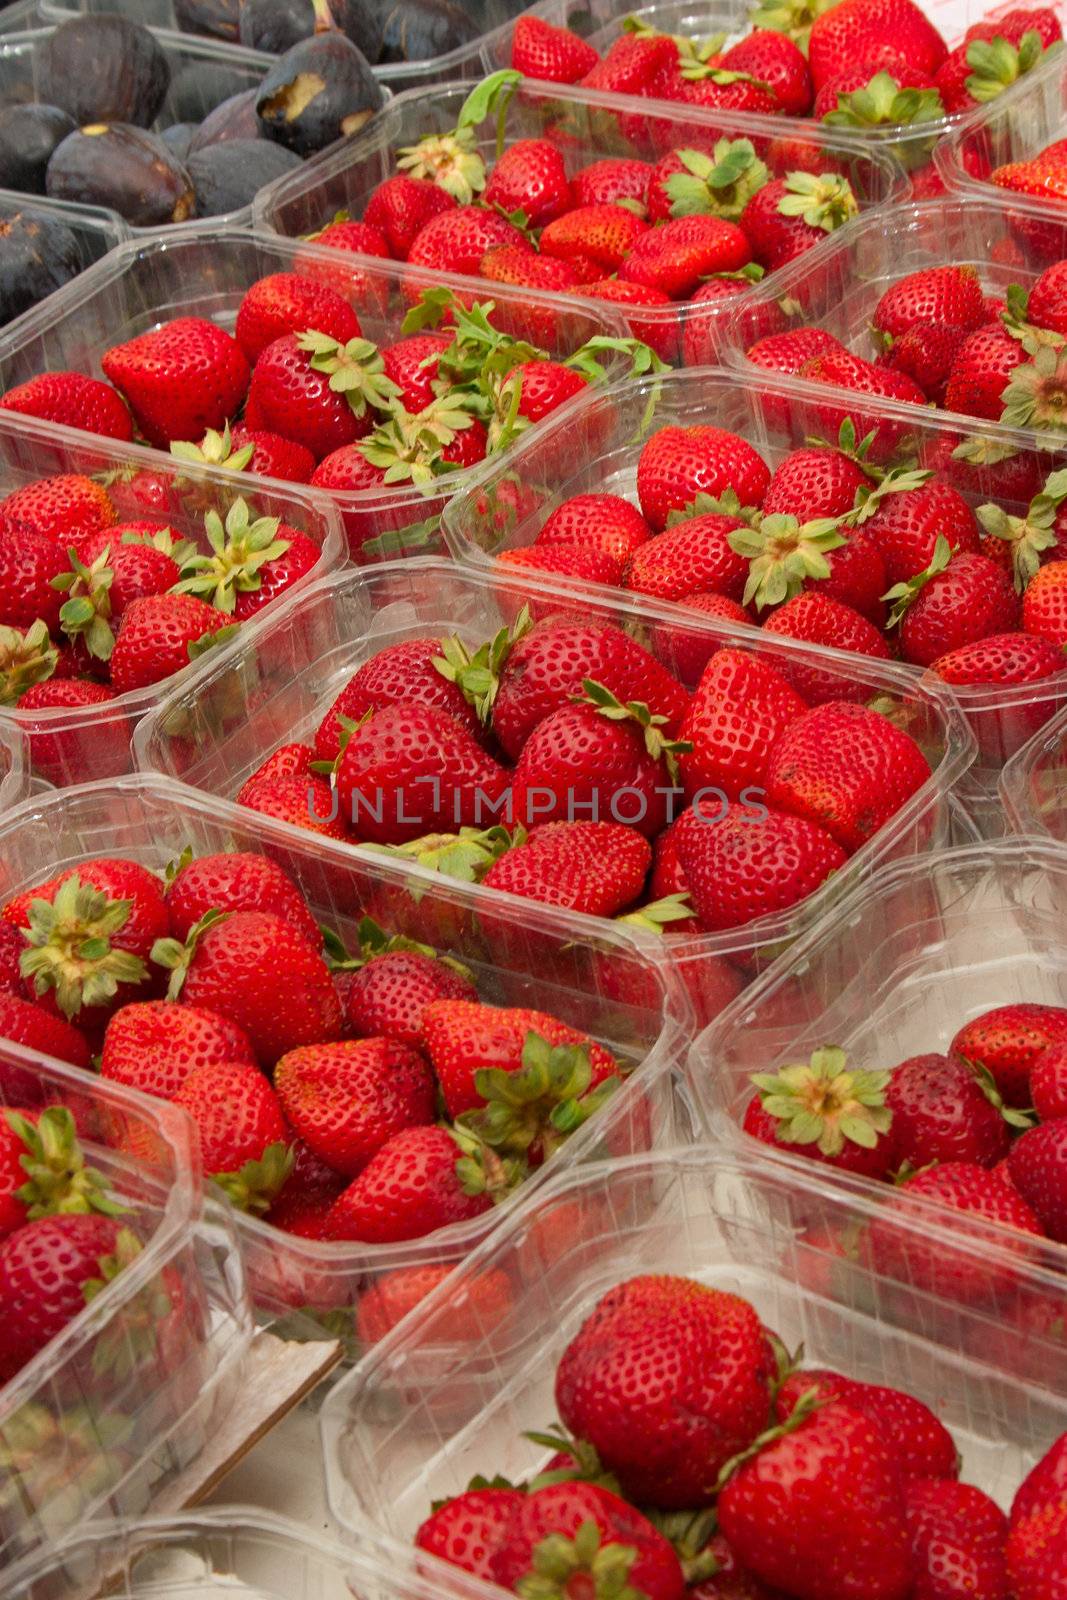 Strawberries at the market by Kartouchken